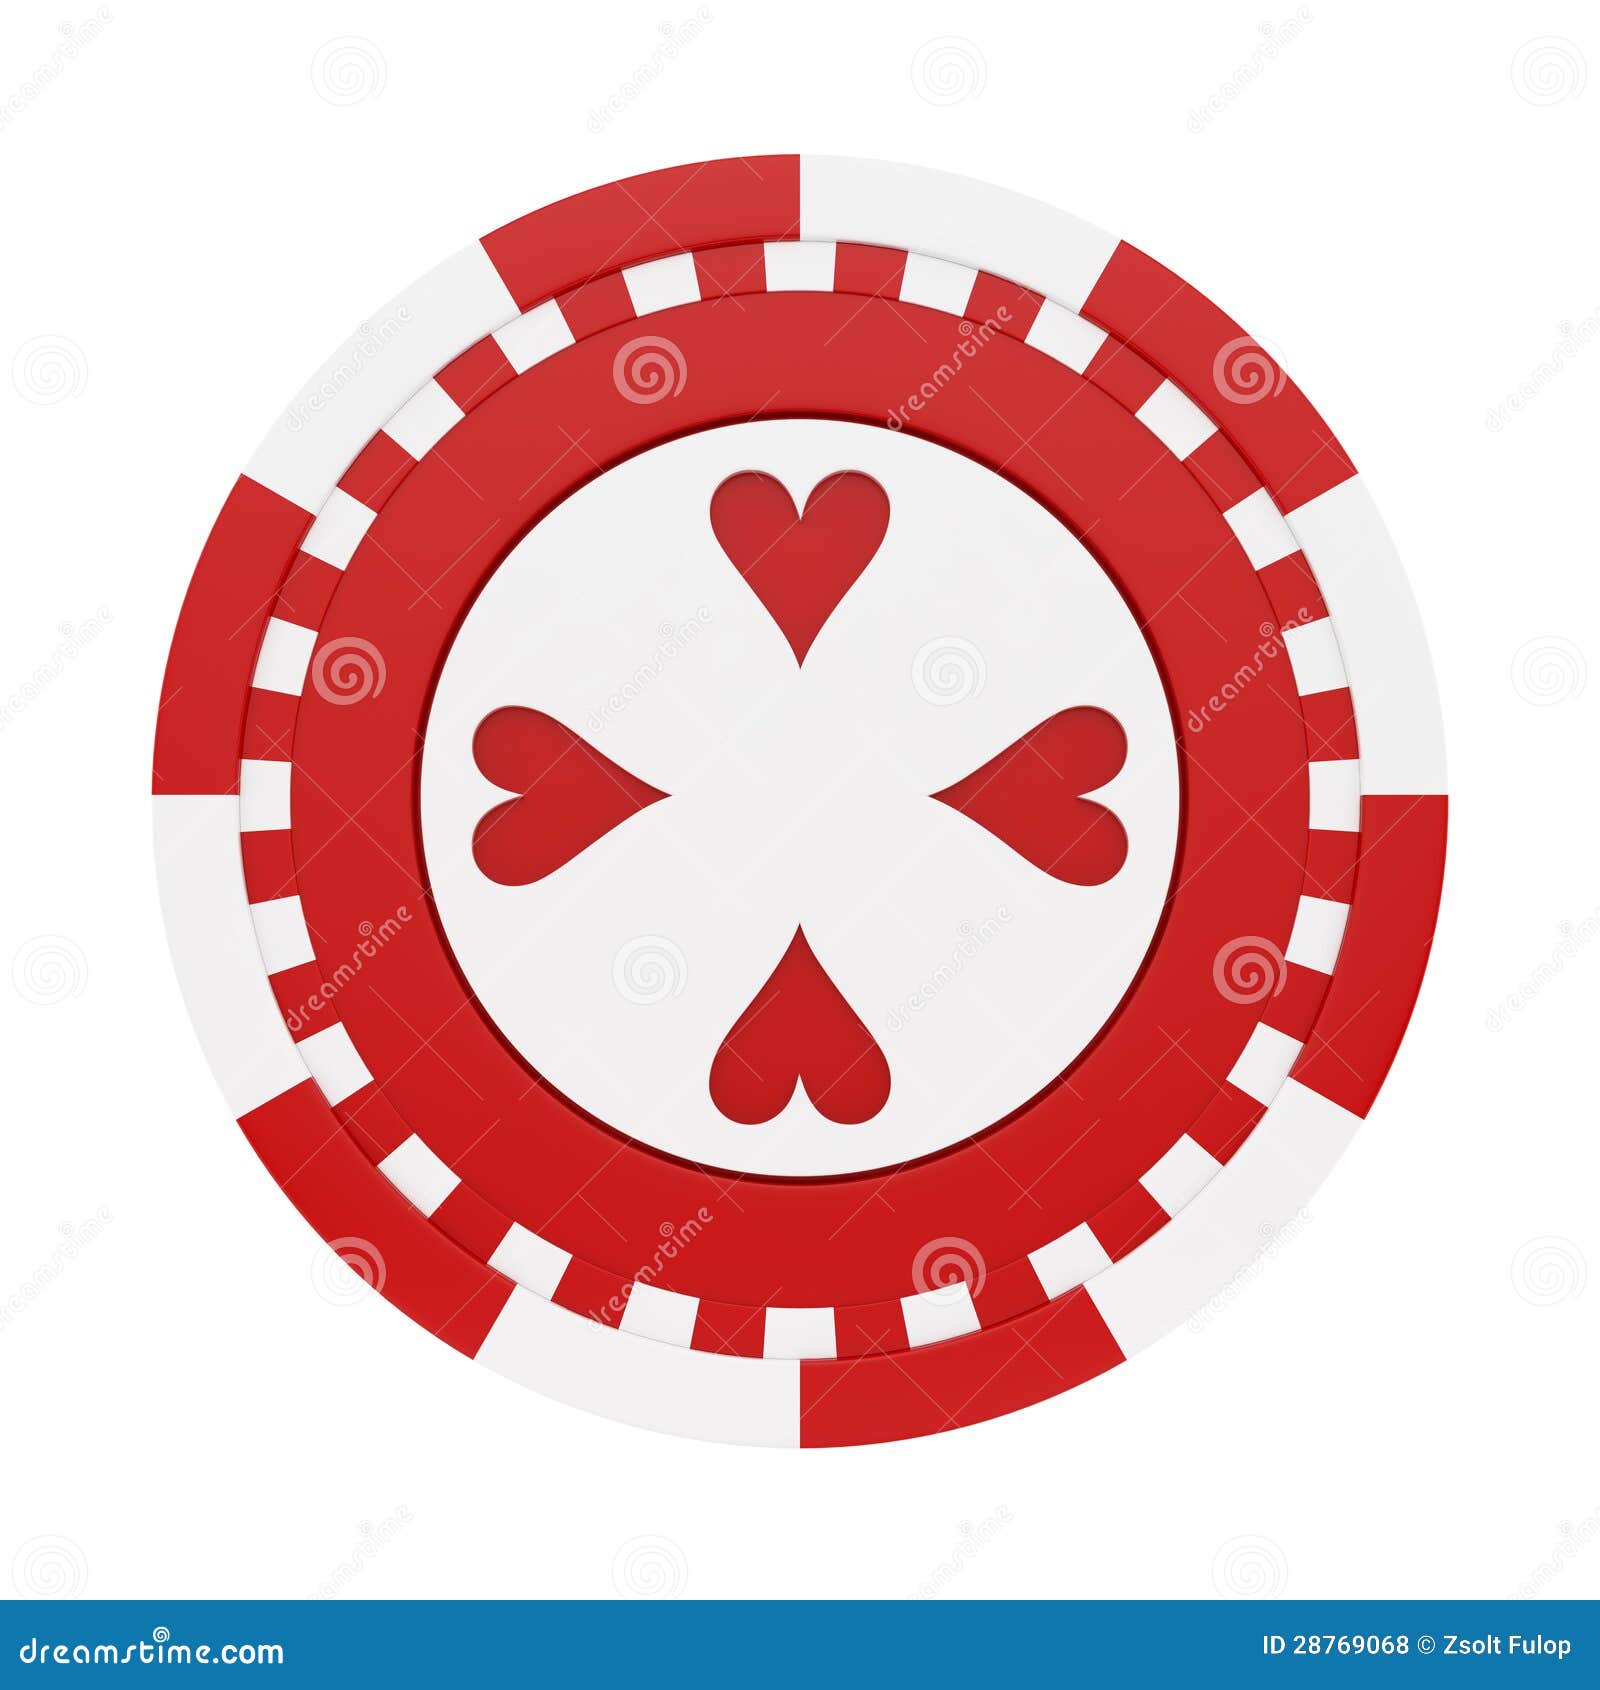 Casino Chip Image